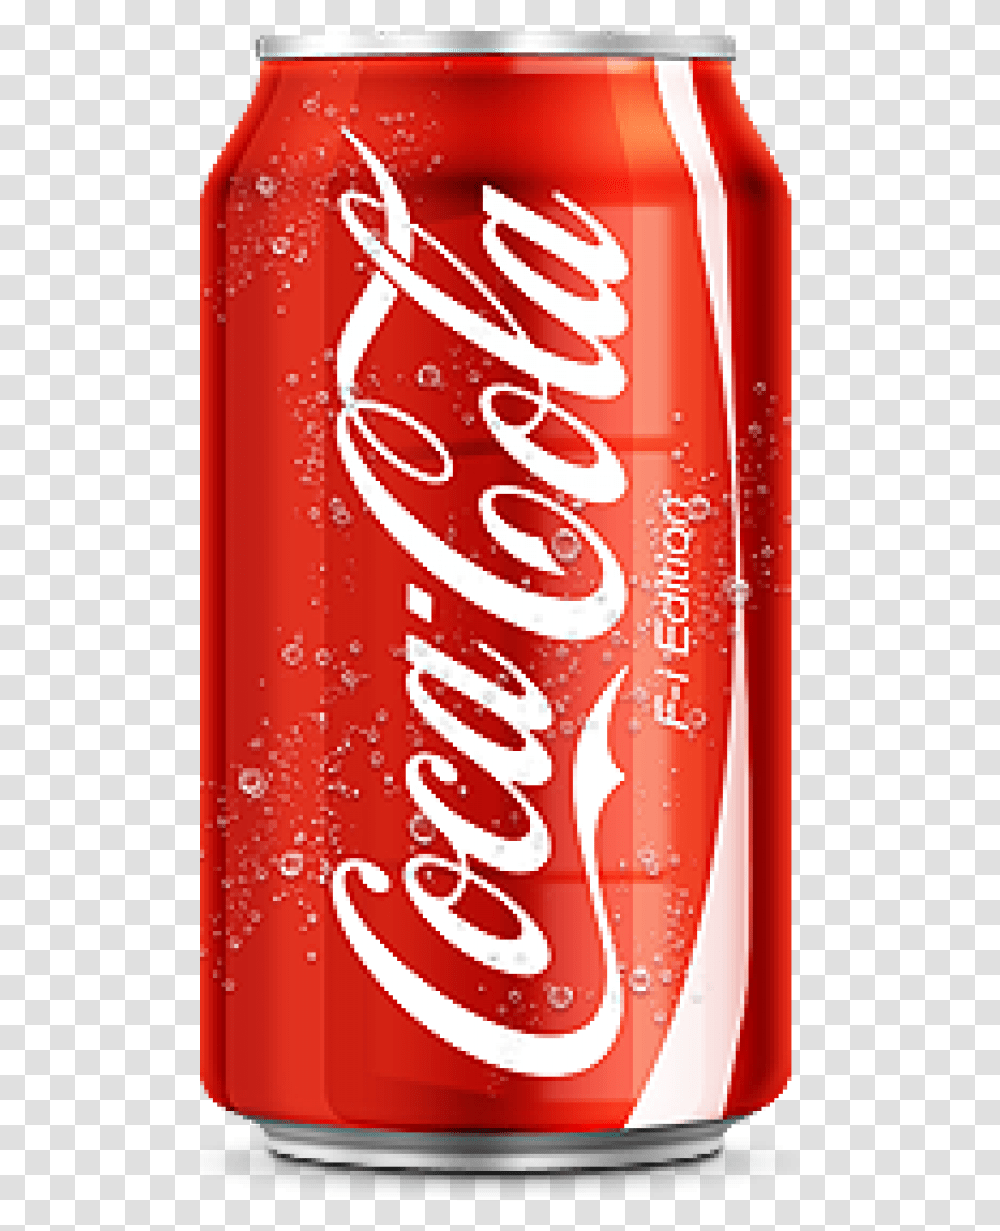 Cocacola Free Download 31 Background Coca Cola, Coke, Beverage, Drink, Soda Transparent Png